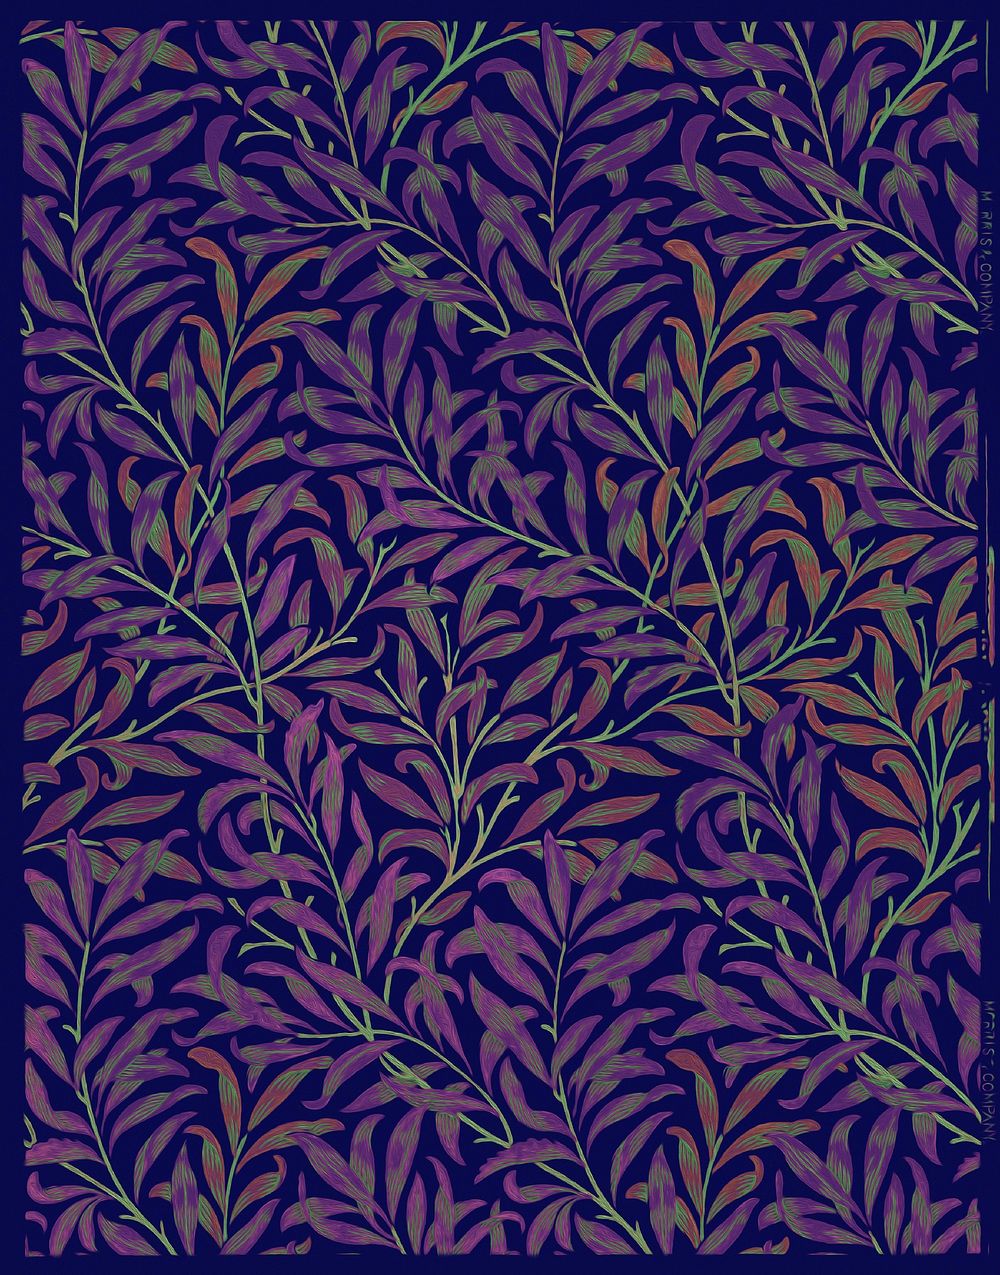 Willow wallpaper vintage design vector, remix from original artwork by William Morris